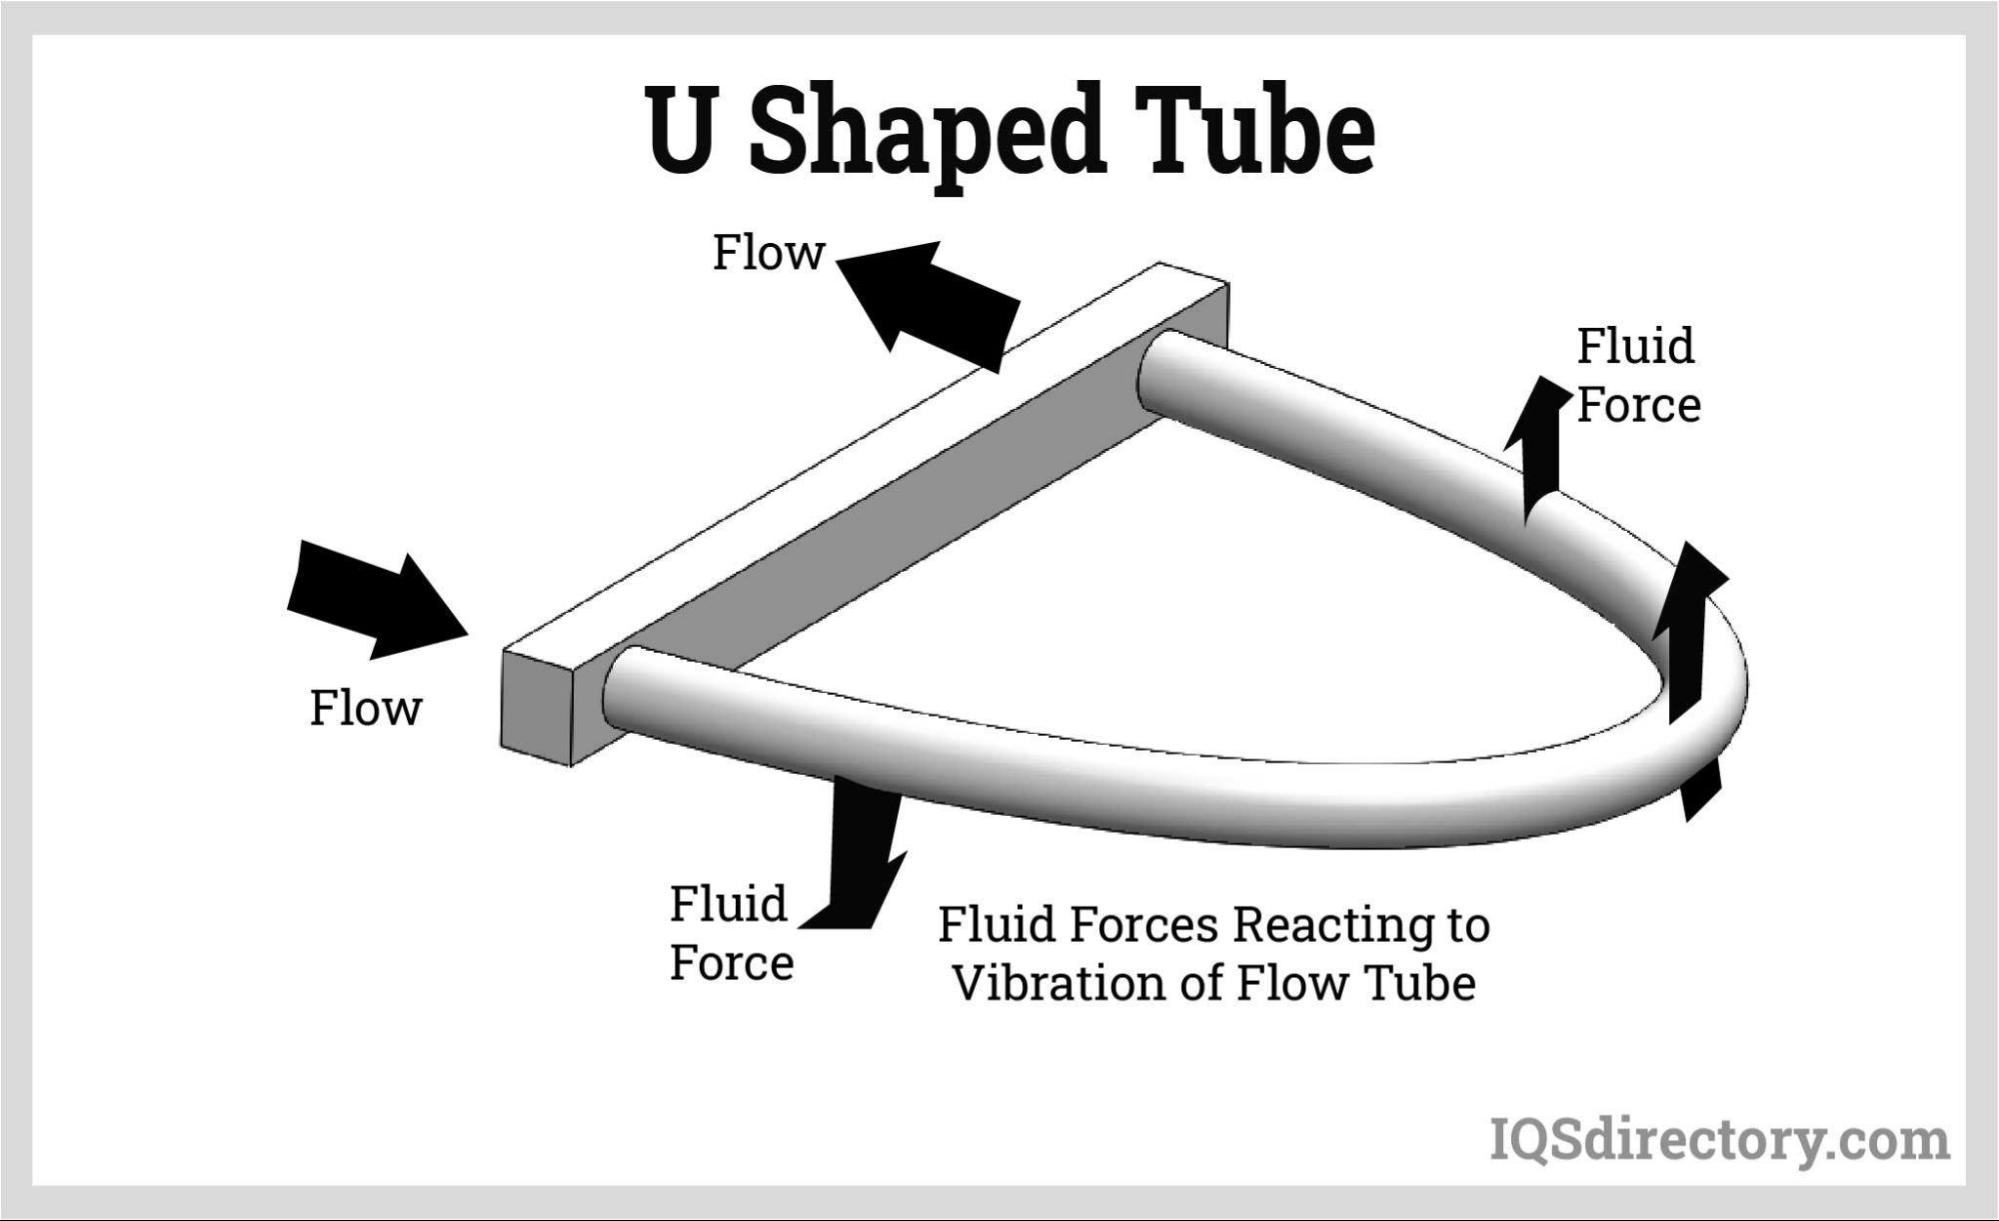 A U-Shaped Tube